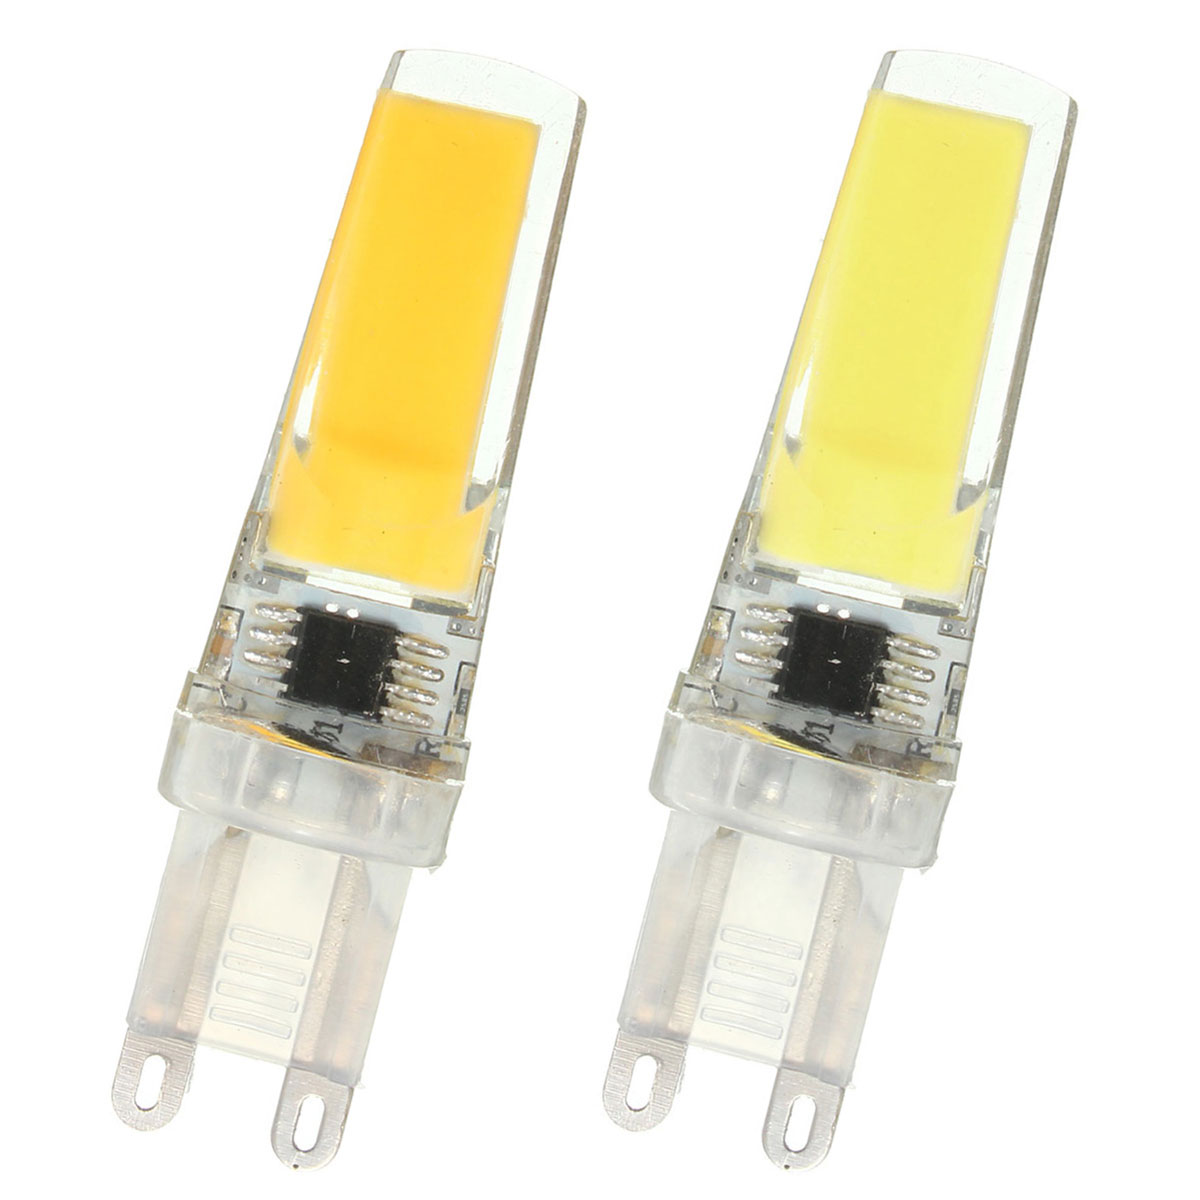 Dimmable-G9-LED-3W-Pure-White-Warm-White-COB-LED-Light-Lamp-Bulb-AC220V-1062193-6